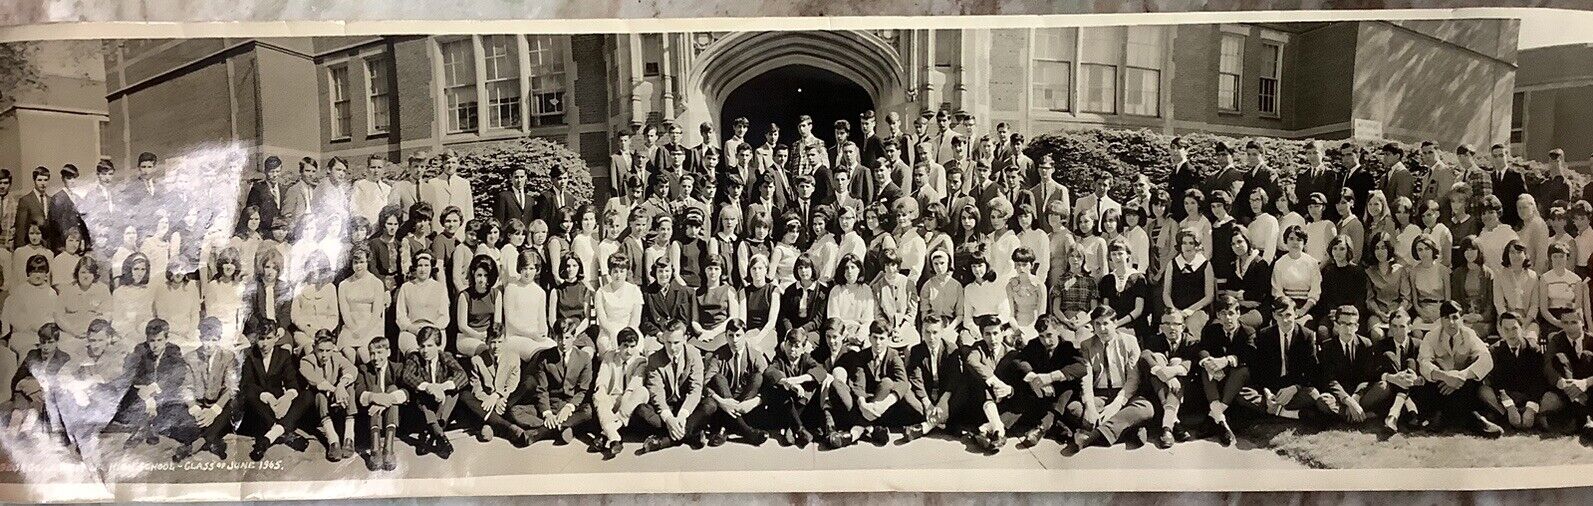 George J West Junior High School June 1965 Class Photo 29” x 8” Providence R.I.